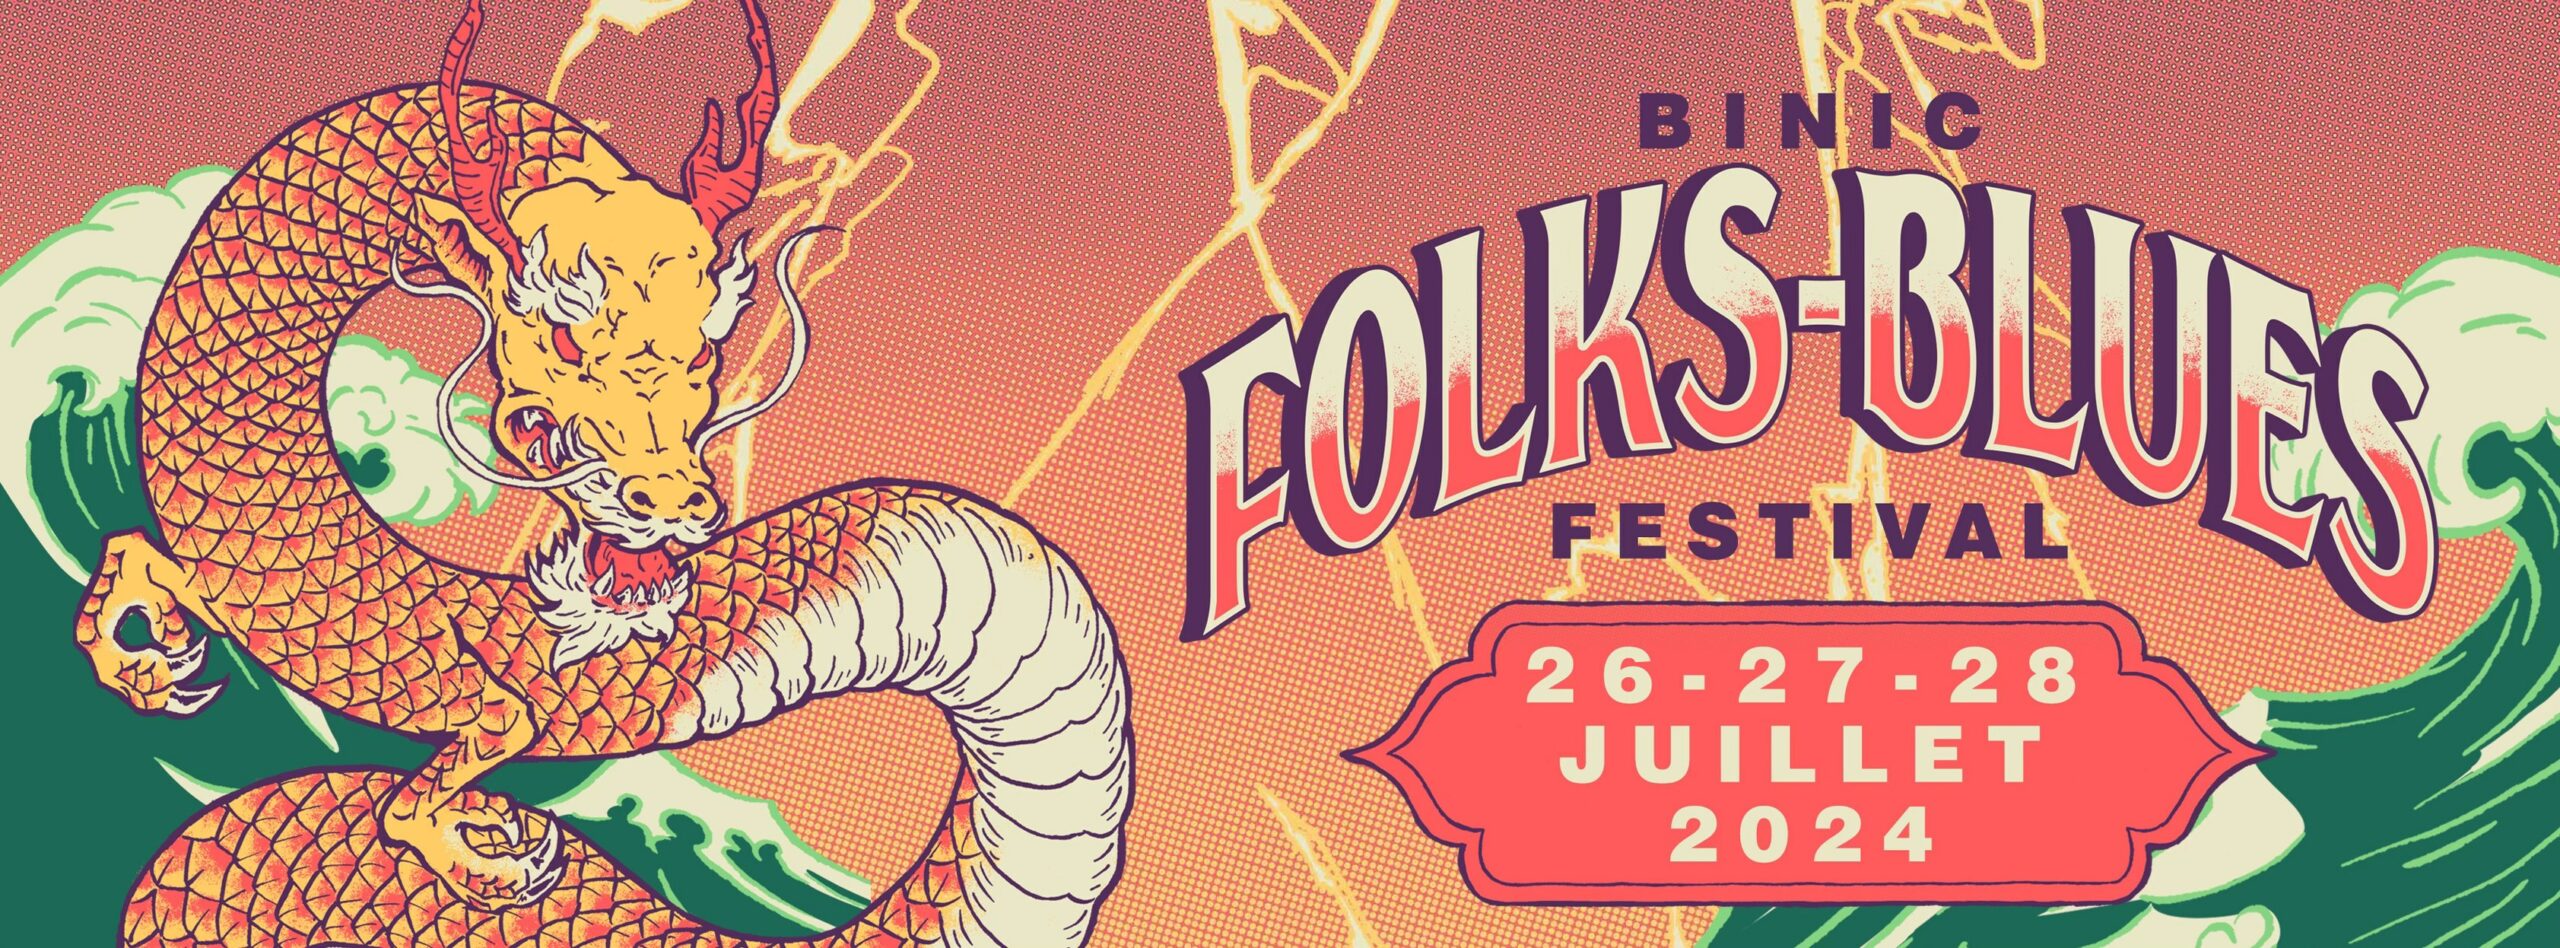 Binic Folks Blues festival, du 26 au 28 juillet 2024 (22)